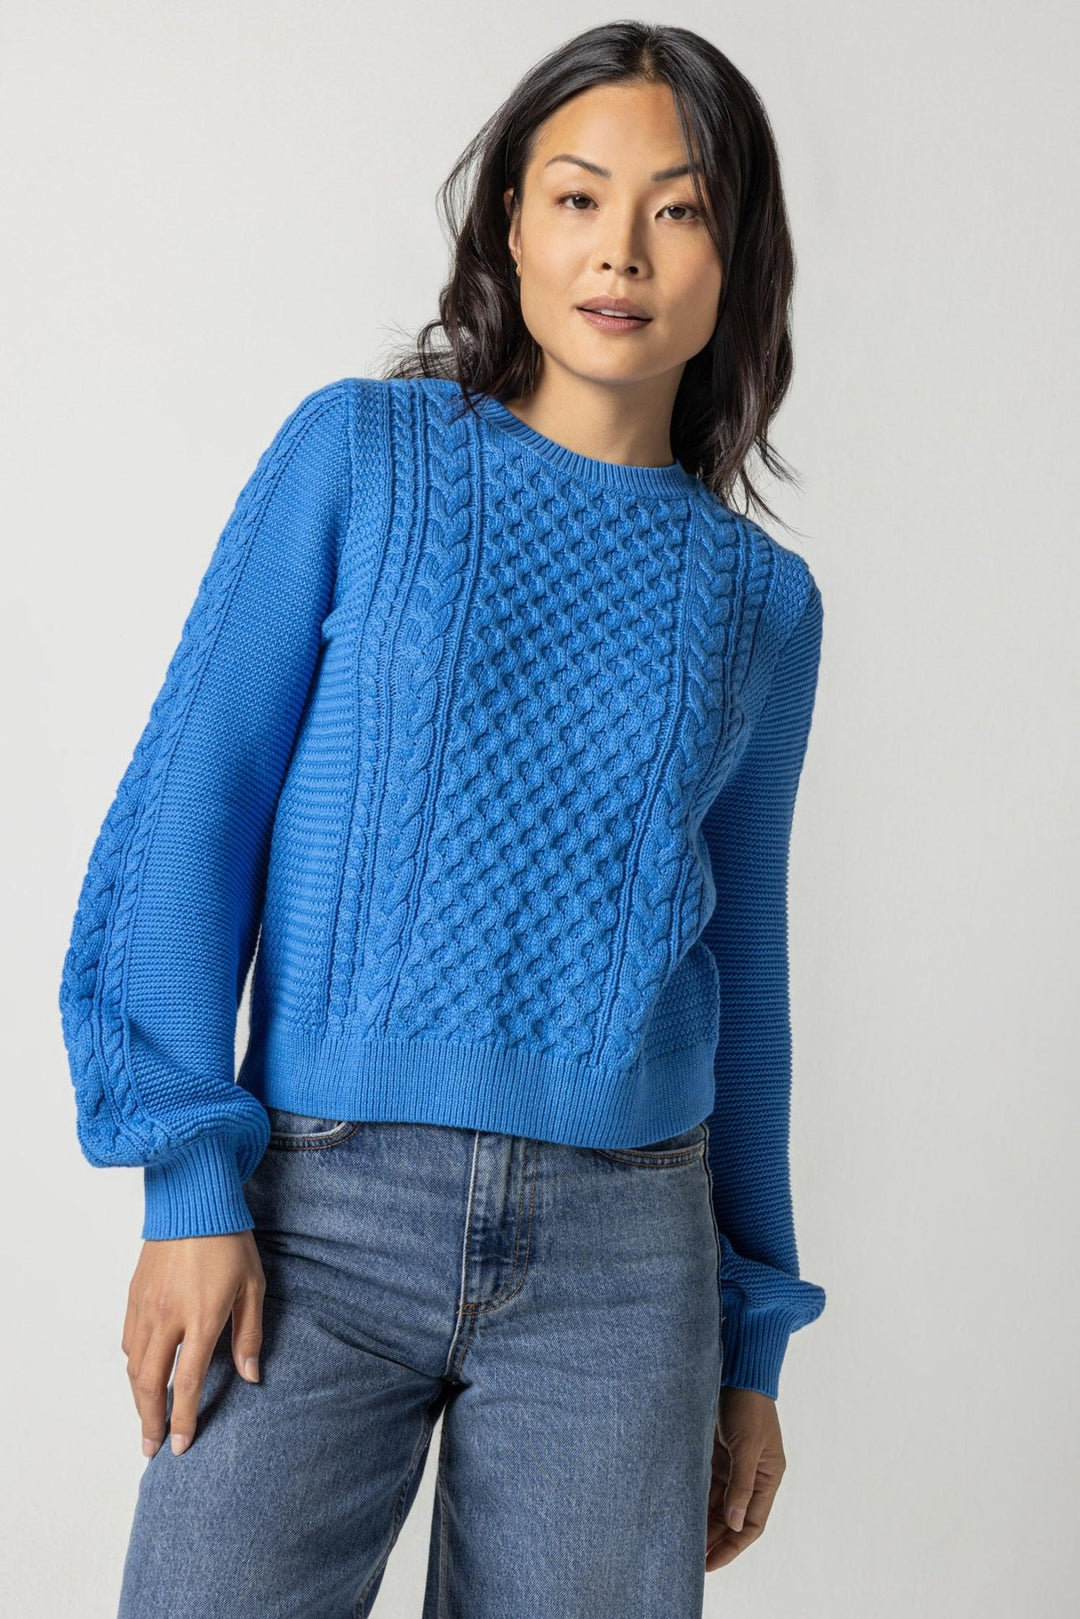 Lilla P - L/S Cable Crewneck Sweater: Lapis - Shorely Chic Boutique